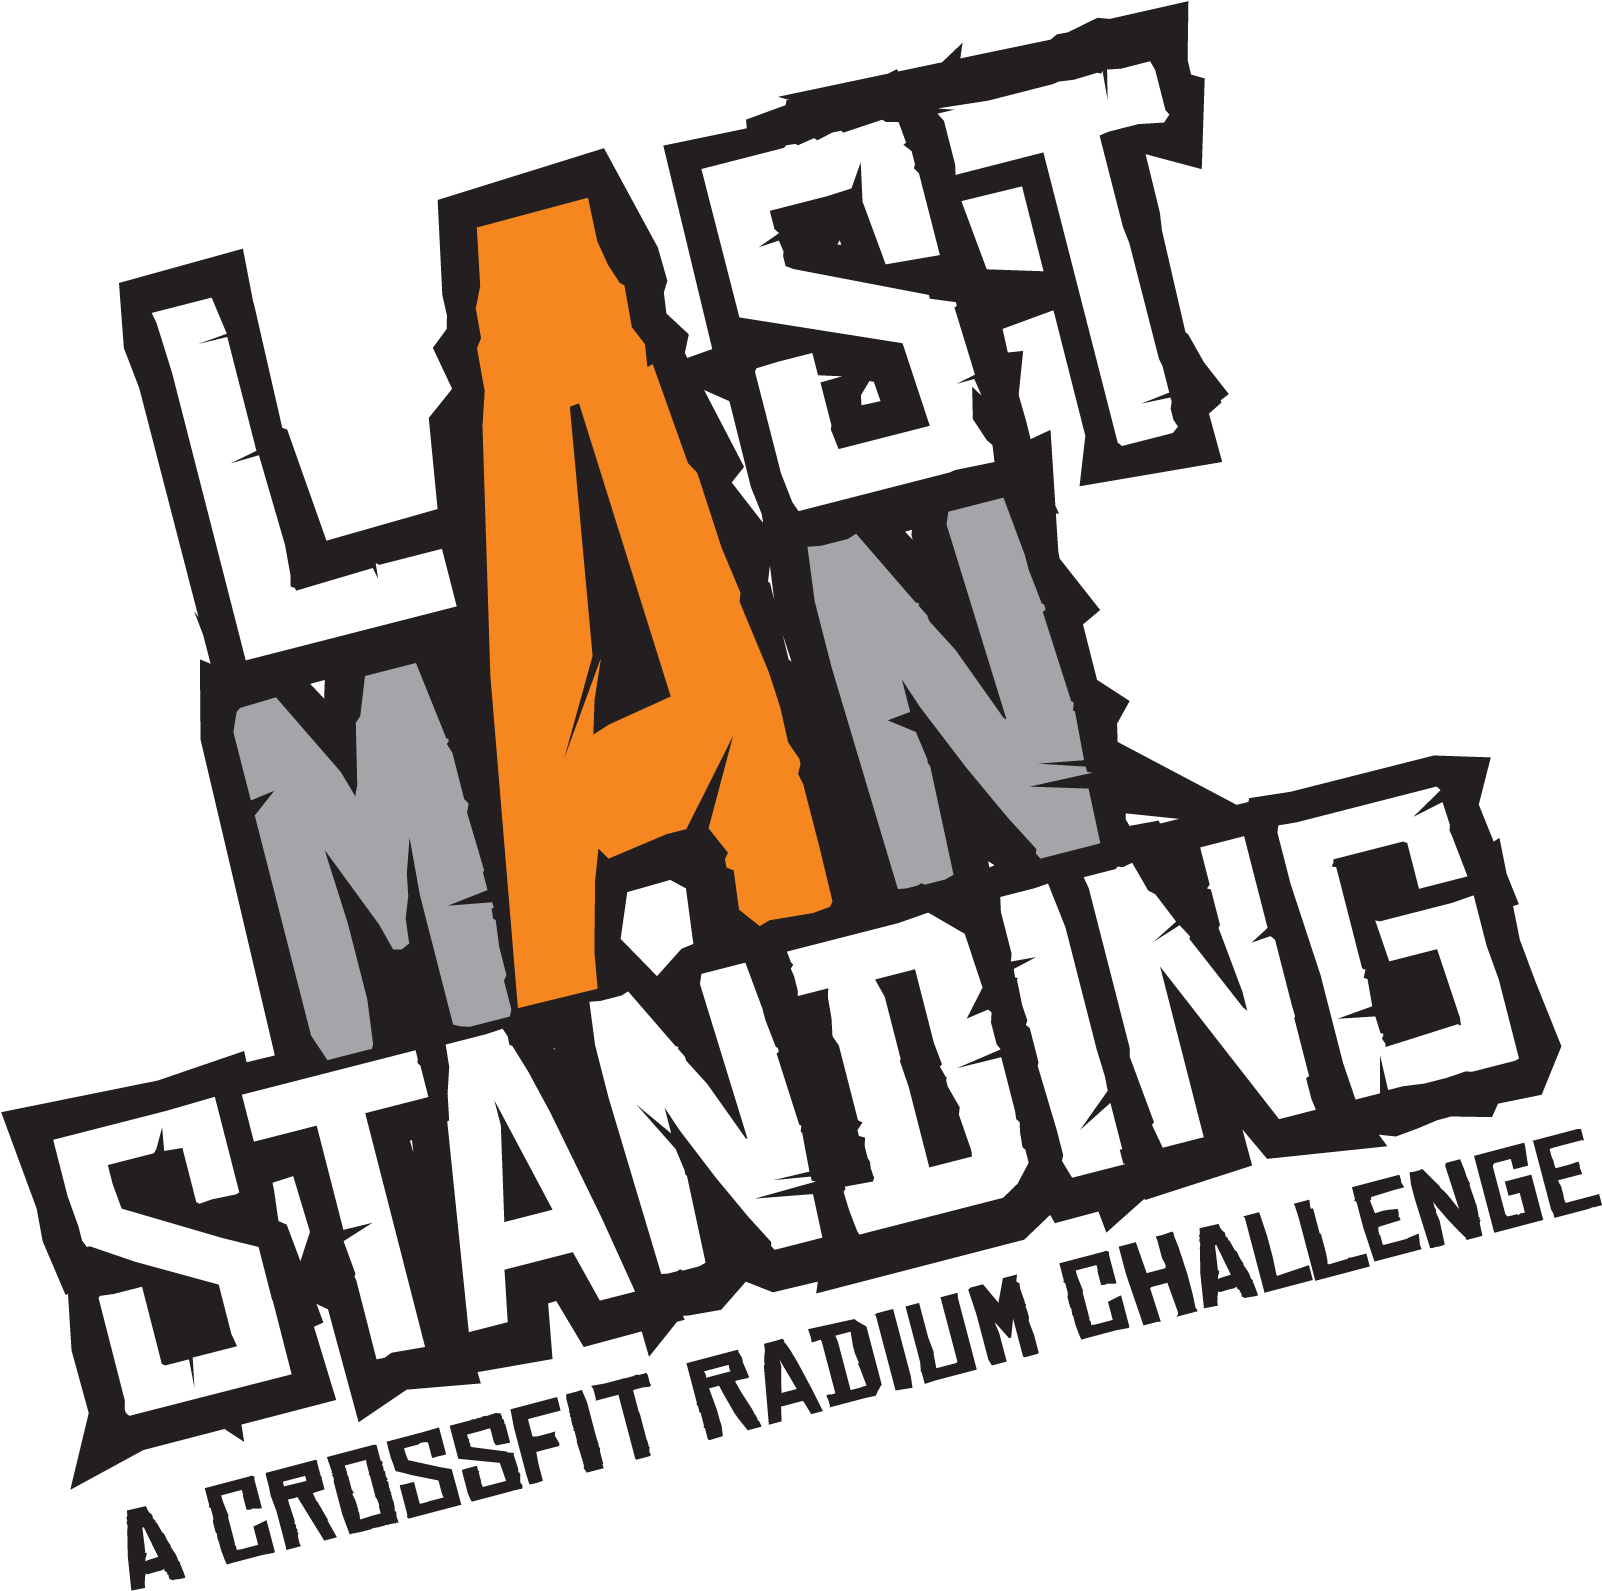 Last man game. Last man standing. ФОНК last man standing. Хобби геймс логотип. Last man standing от Livingston.